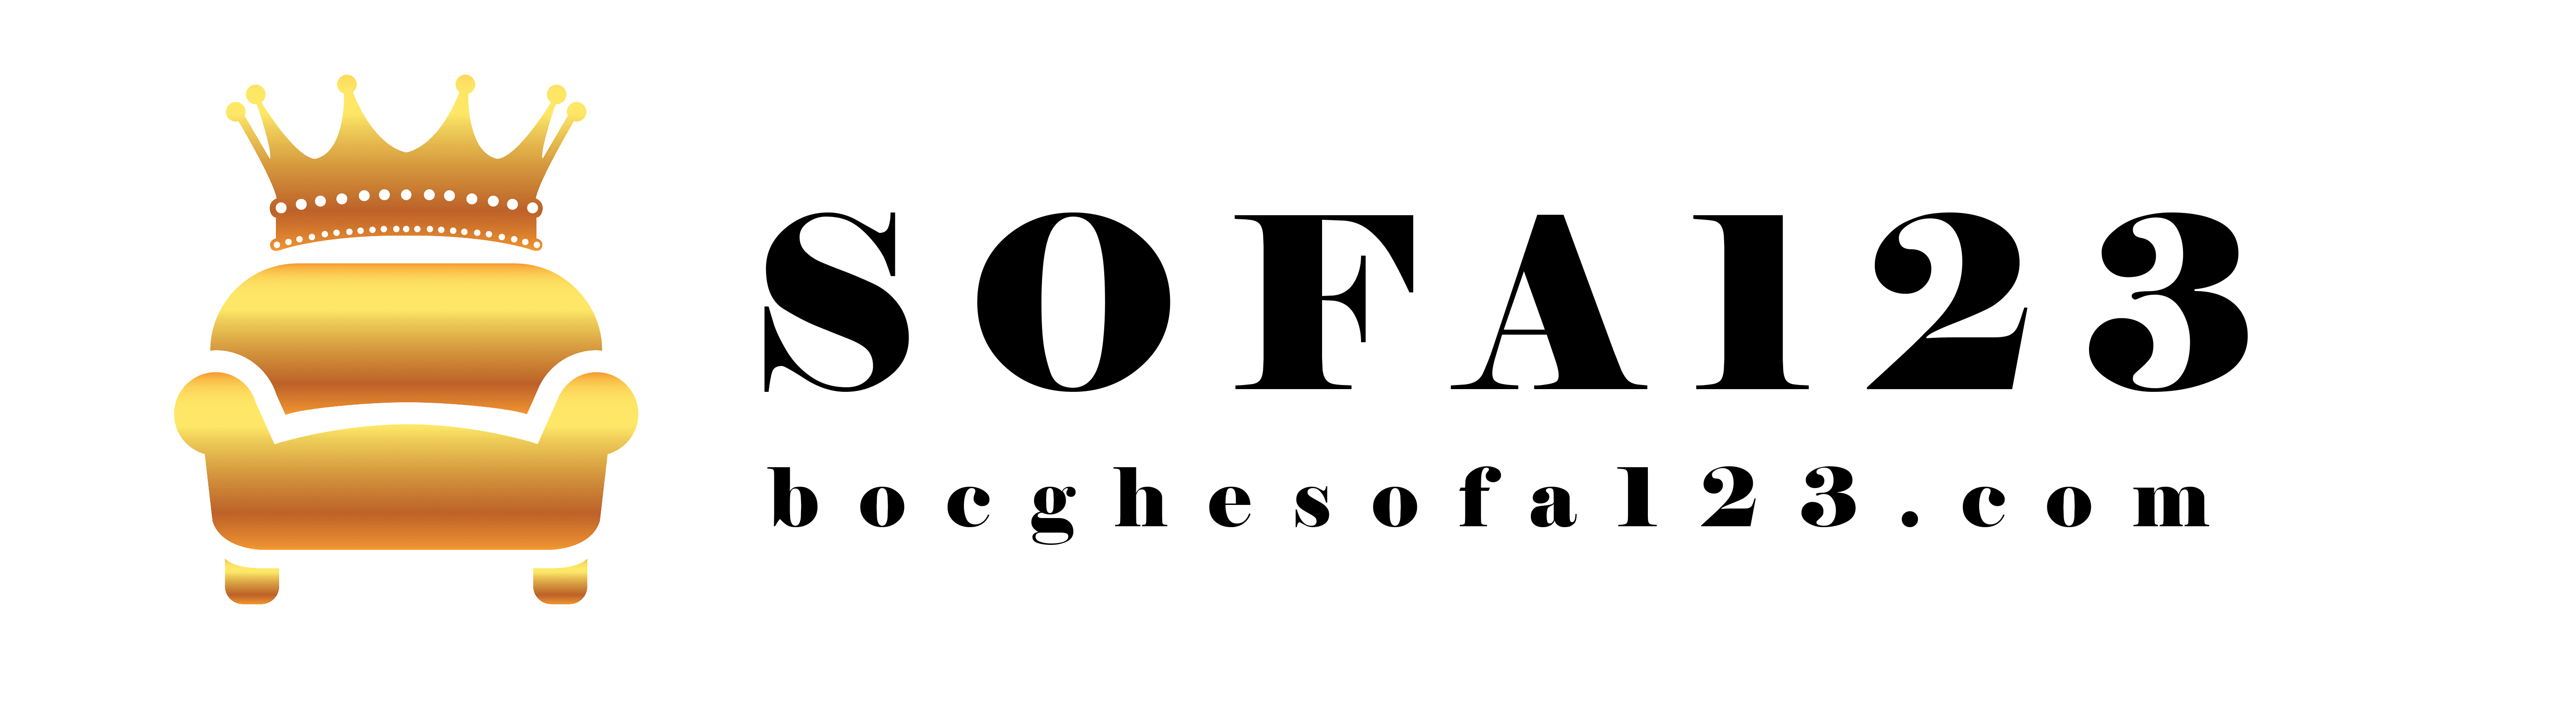 logo sofa123 2 1